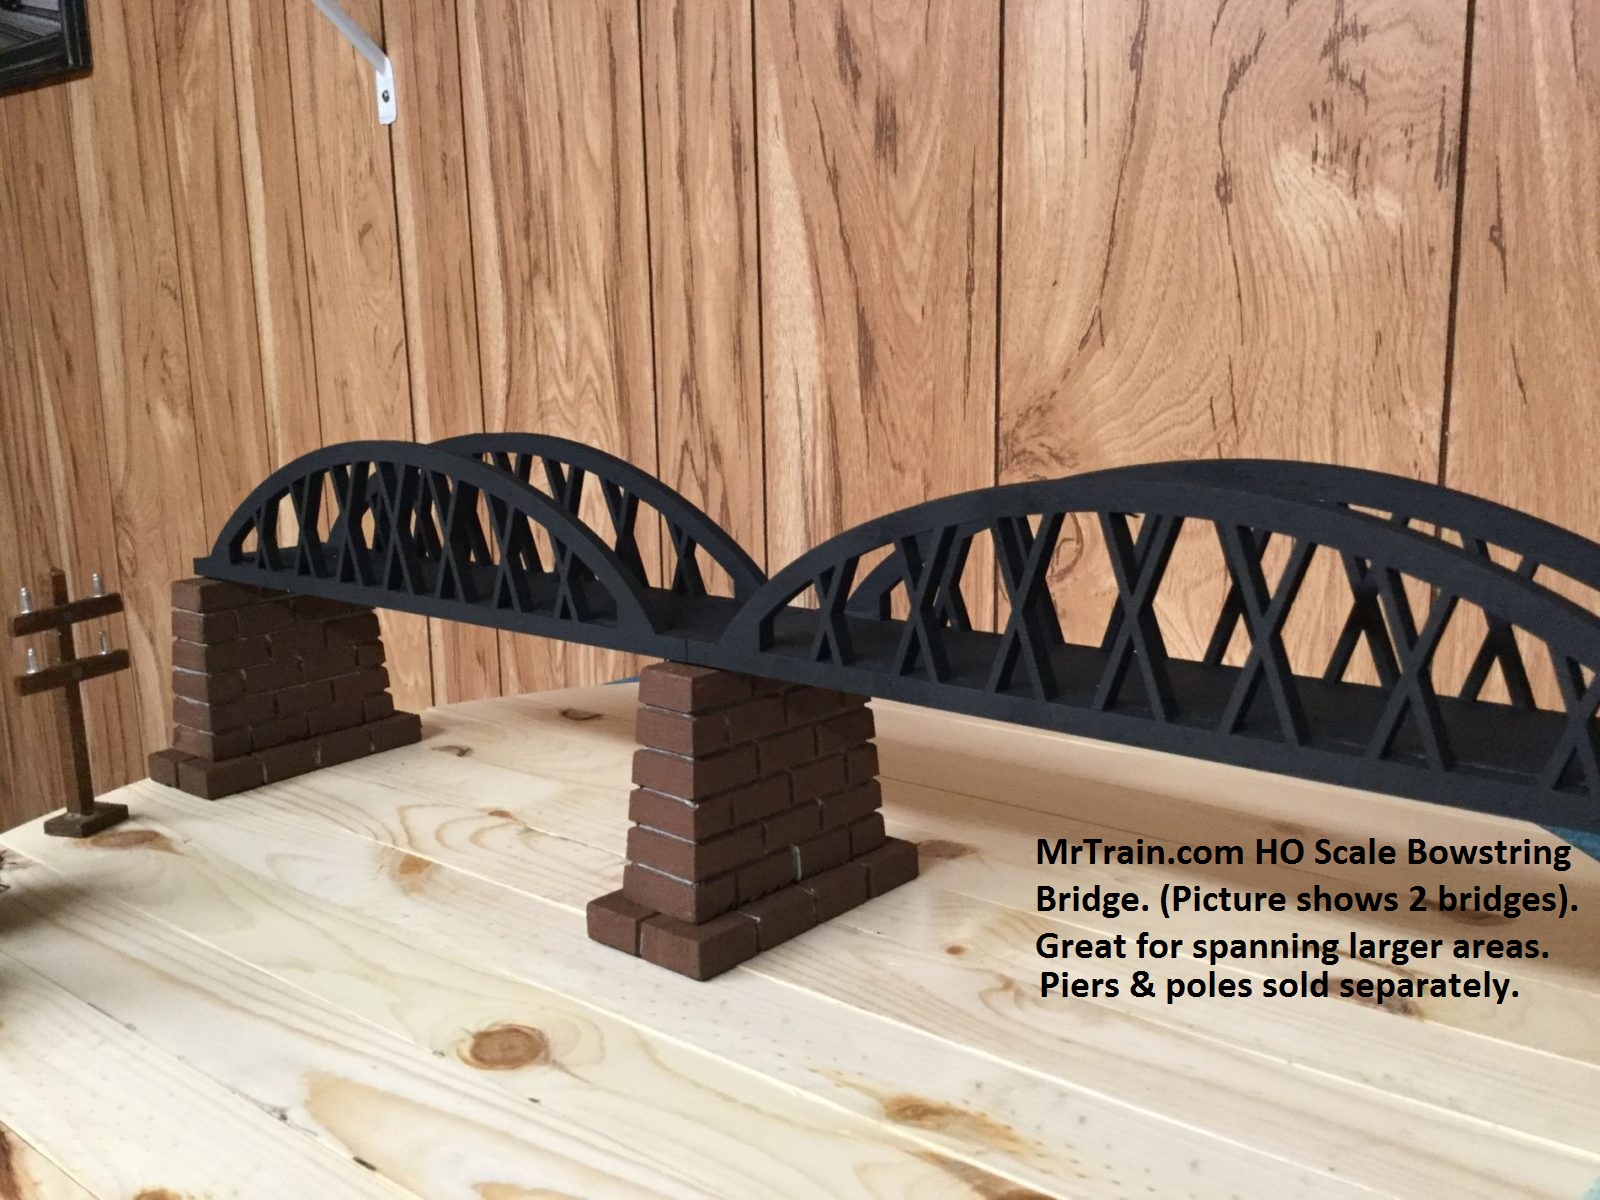 HO Scale Bowstring Bridge - Miniature Train Scenery - MrTrain